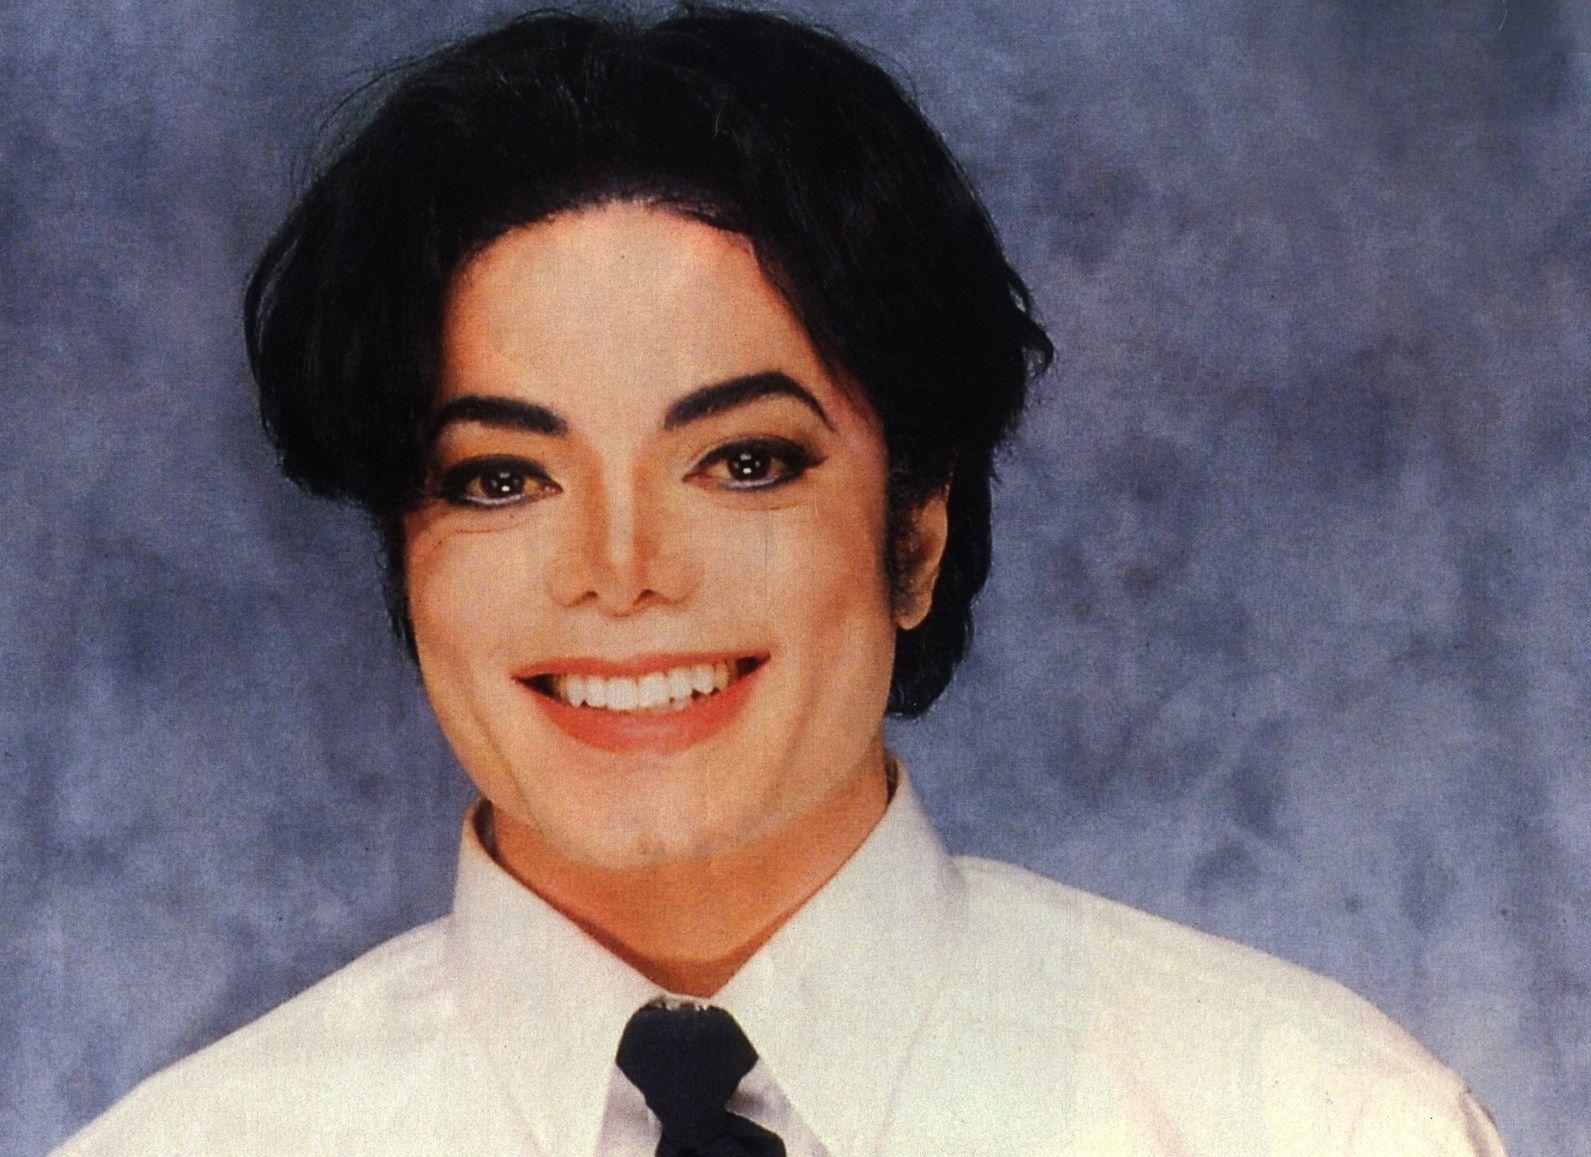 Michael Jackson, Cute Smile By Celtica Jackson